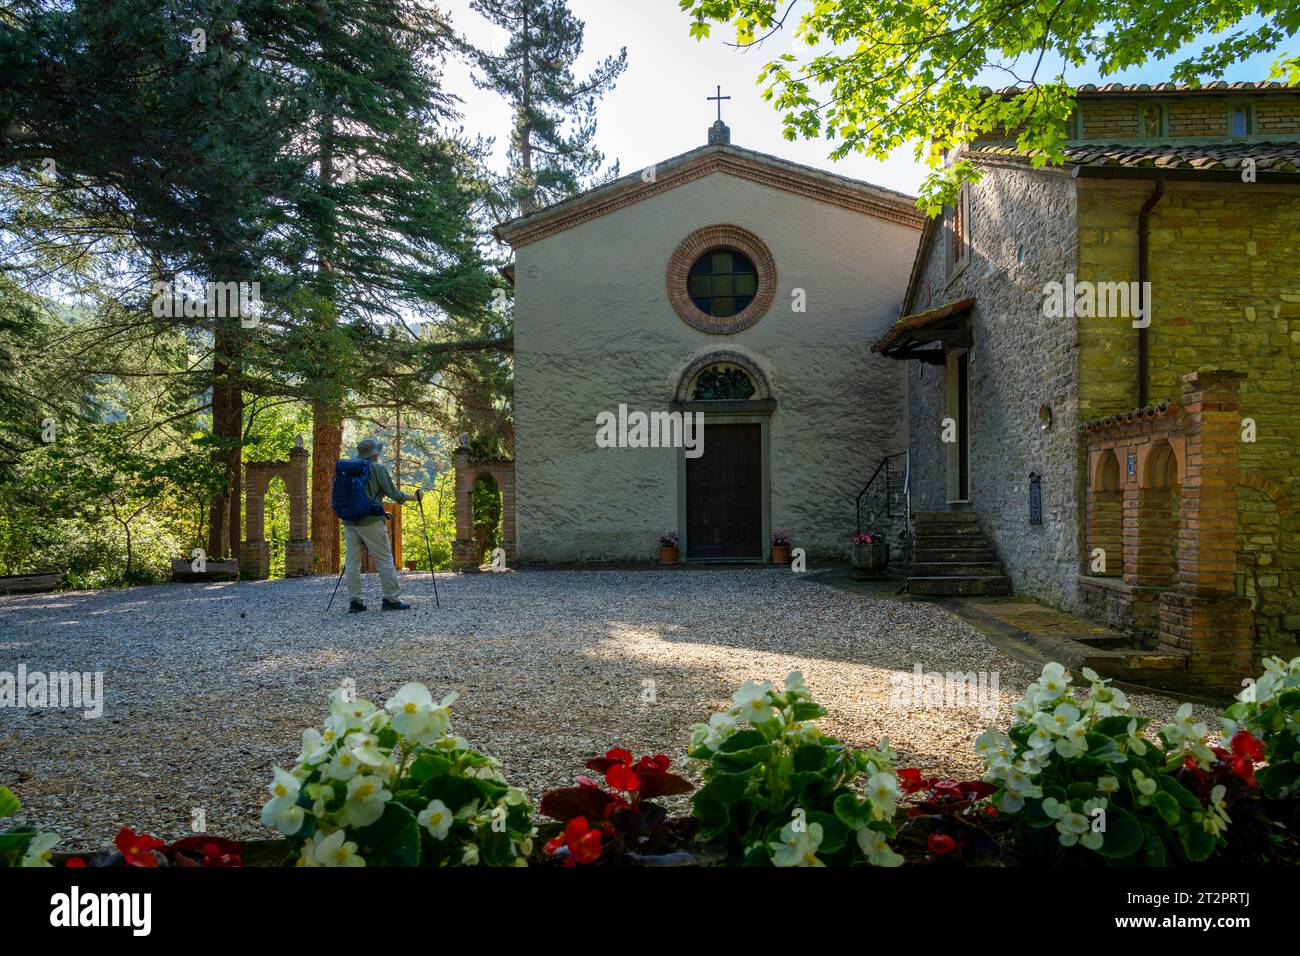 Man with backpack admiring a church in the apennines. Santa Reparata, Modigliana, Forlì, Emilia Romagna, Italy, Europe. Stock Photo